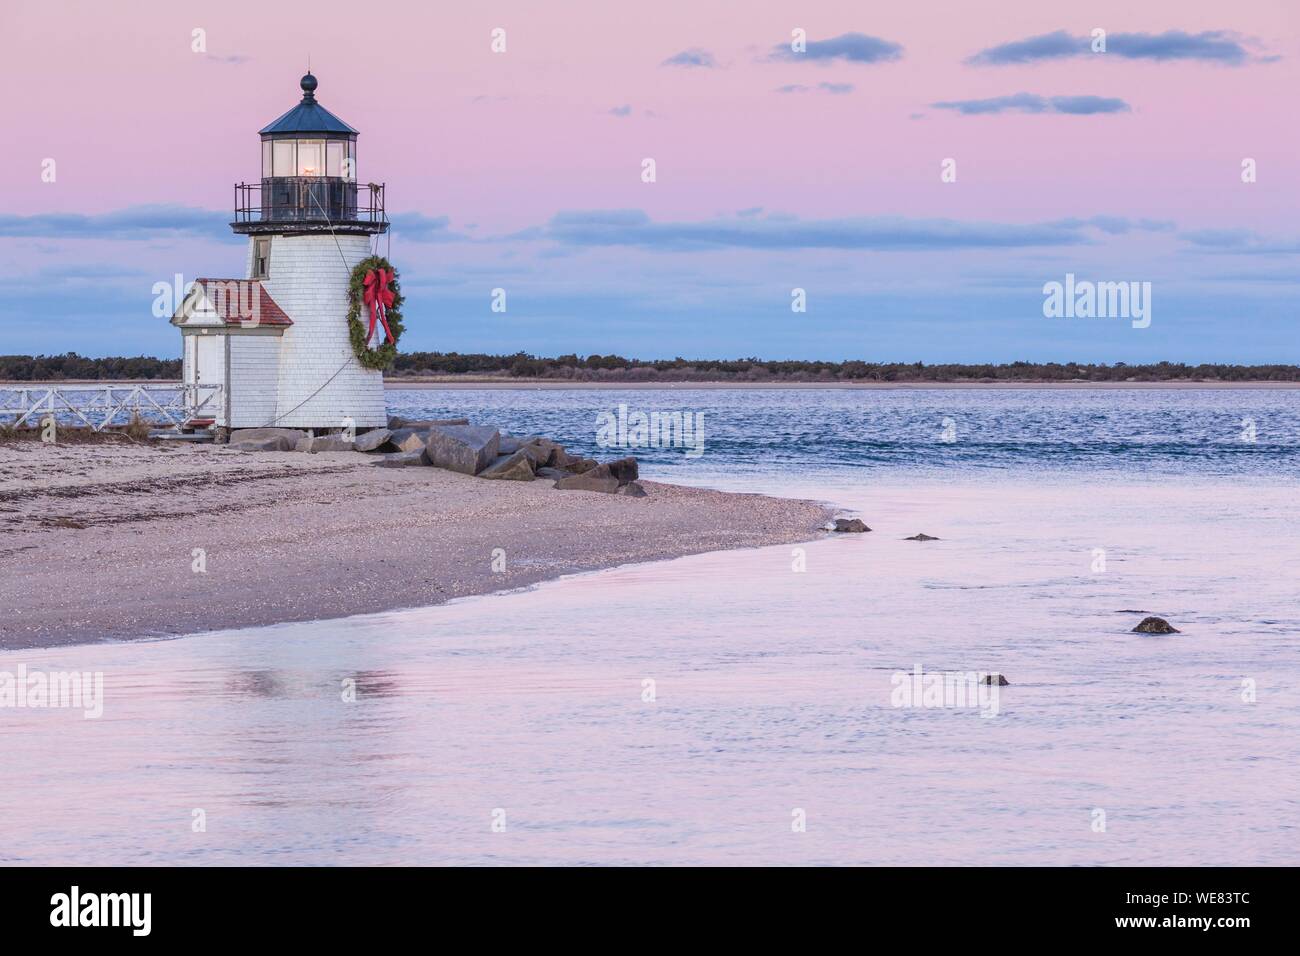 United States, New England, Massachusetts, Nantucket Island, Nantucket, Brant Point Lighthouse with a Christmas wreath, dusk Stock Photo